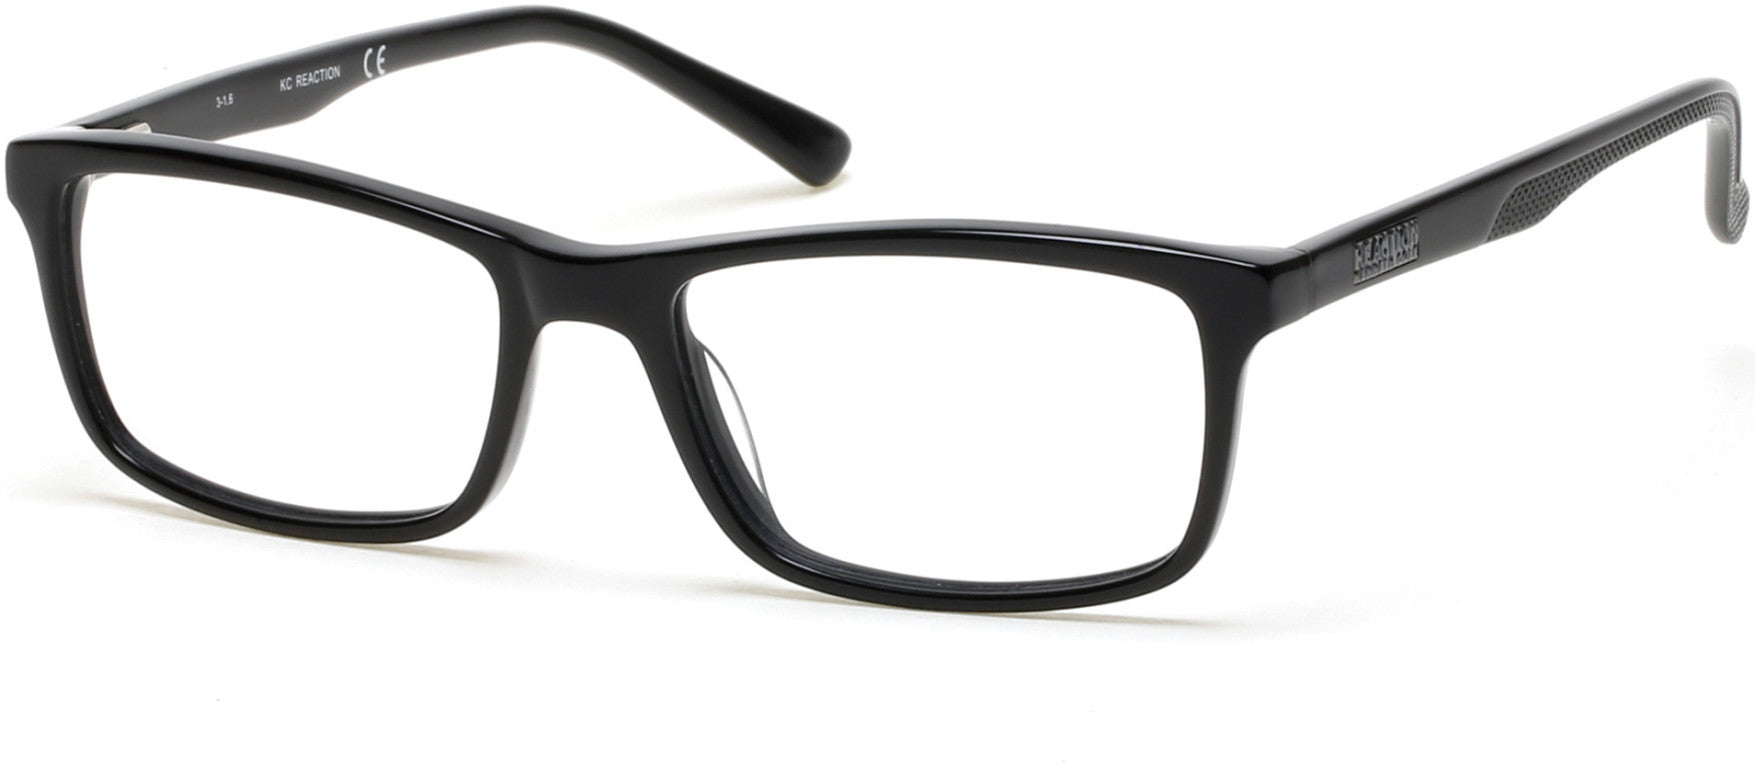 Kenneth Cole New York,Kenneth Cole Reaction KC0787 Geometric Eyeglasses 001-001 - Shiny Black